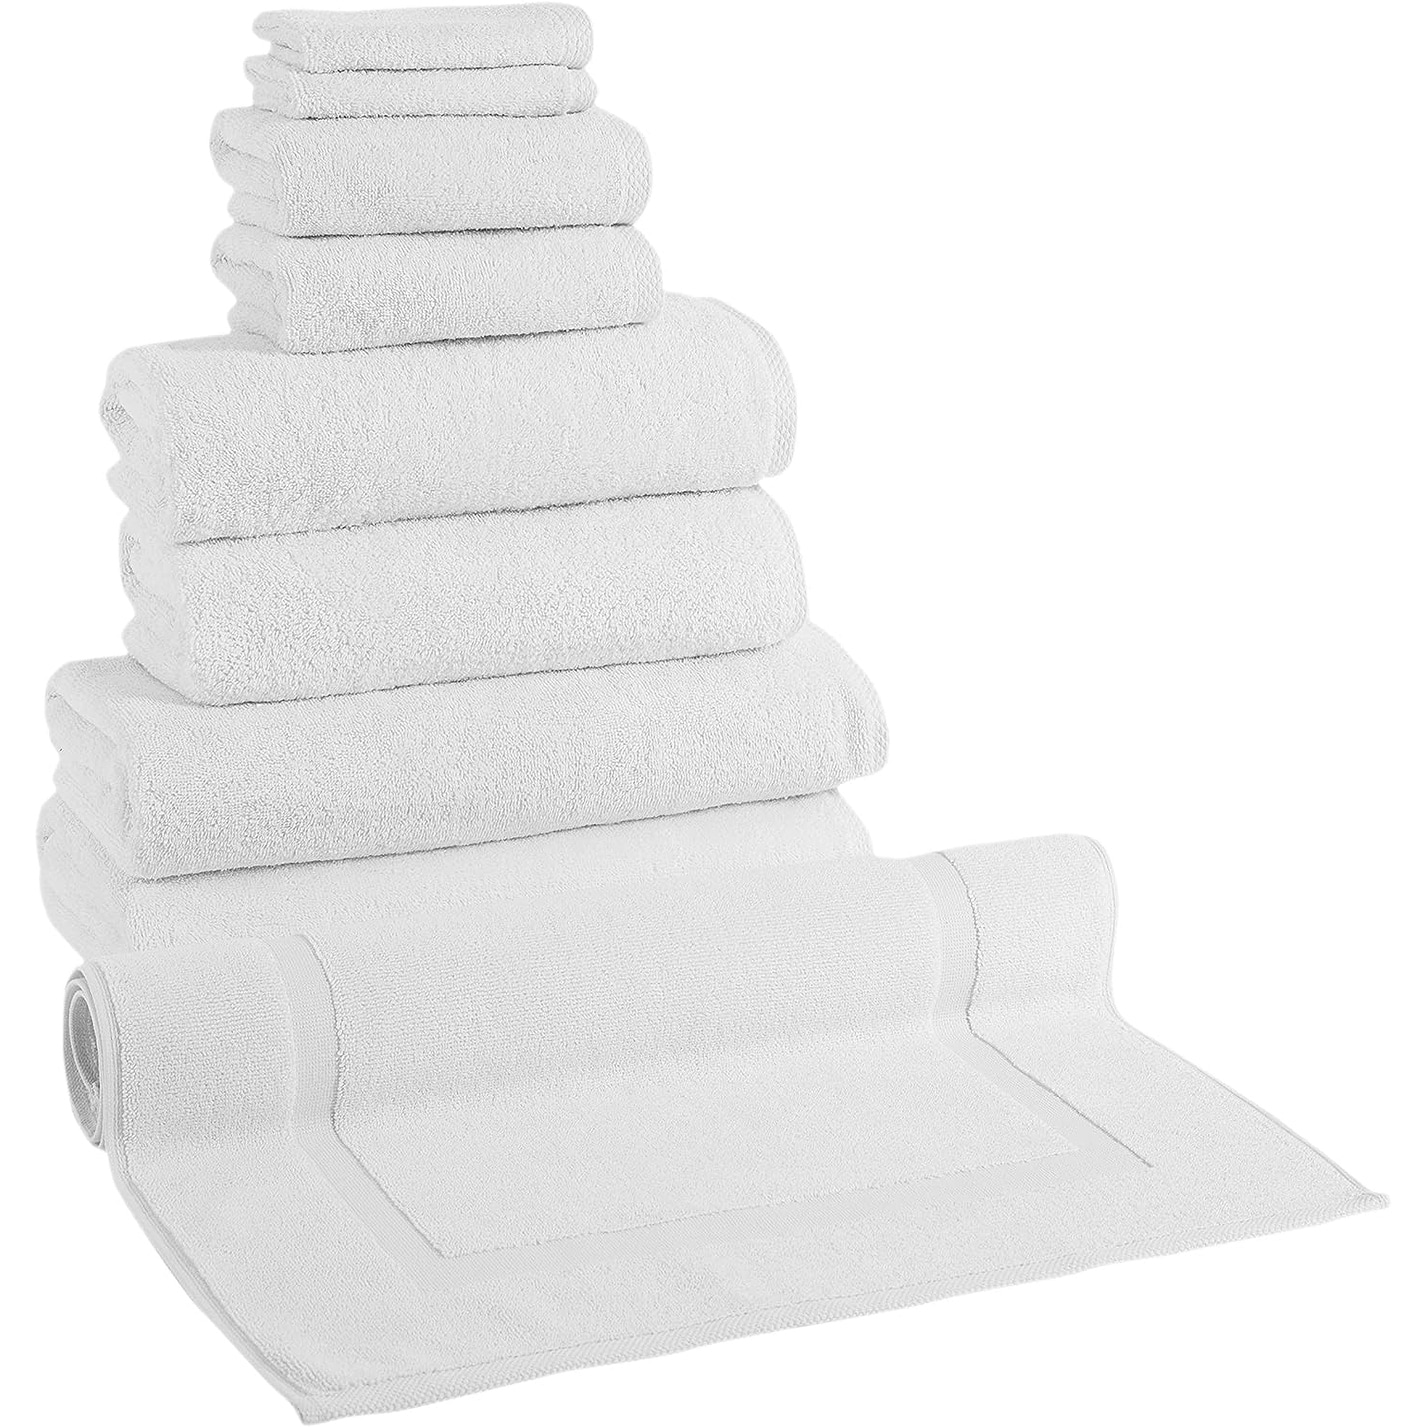 https://ak1.ostkcdn.com/images/products/is/images/direct/047ecdc66b06b59c7c9953bc68d2e685af63e850/Classic-Turkish-Towels-9-piece-Family-Towel-Set.jpg